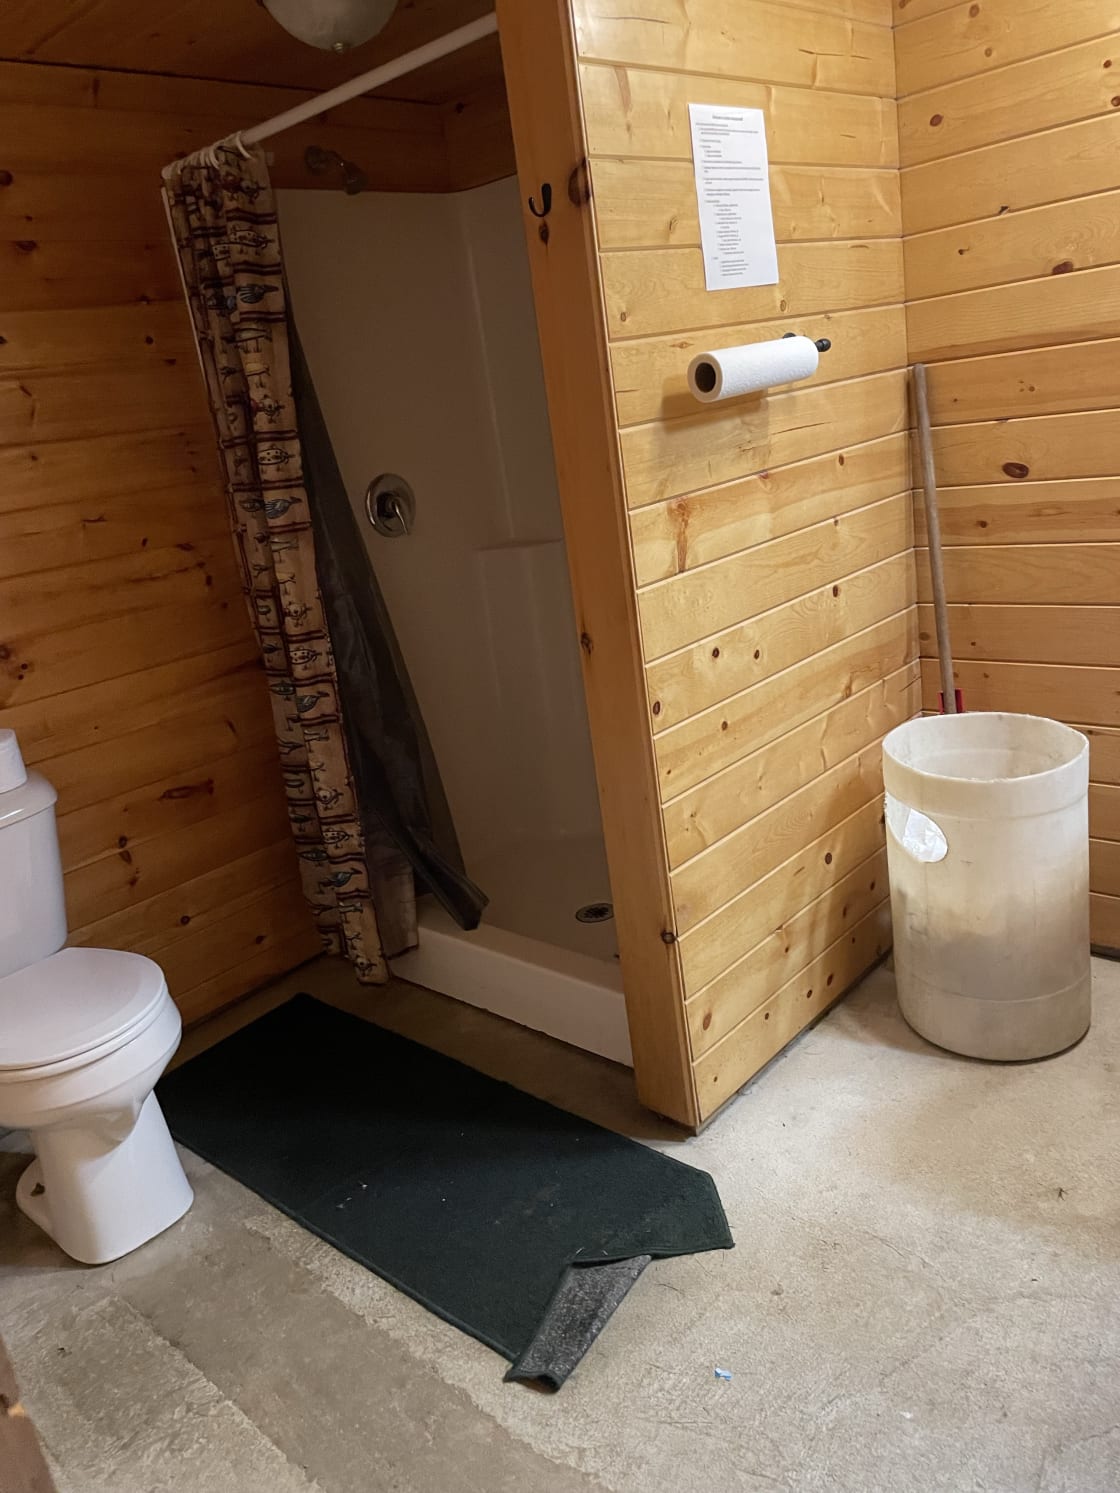 One bathroom on campground. Good shower!